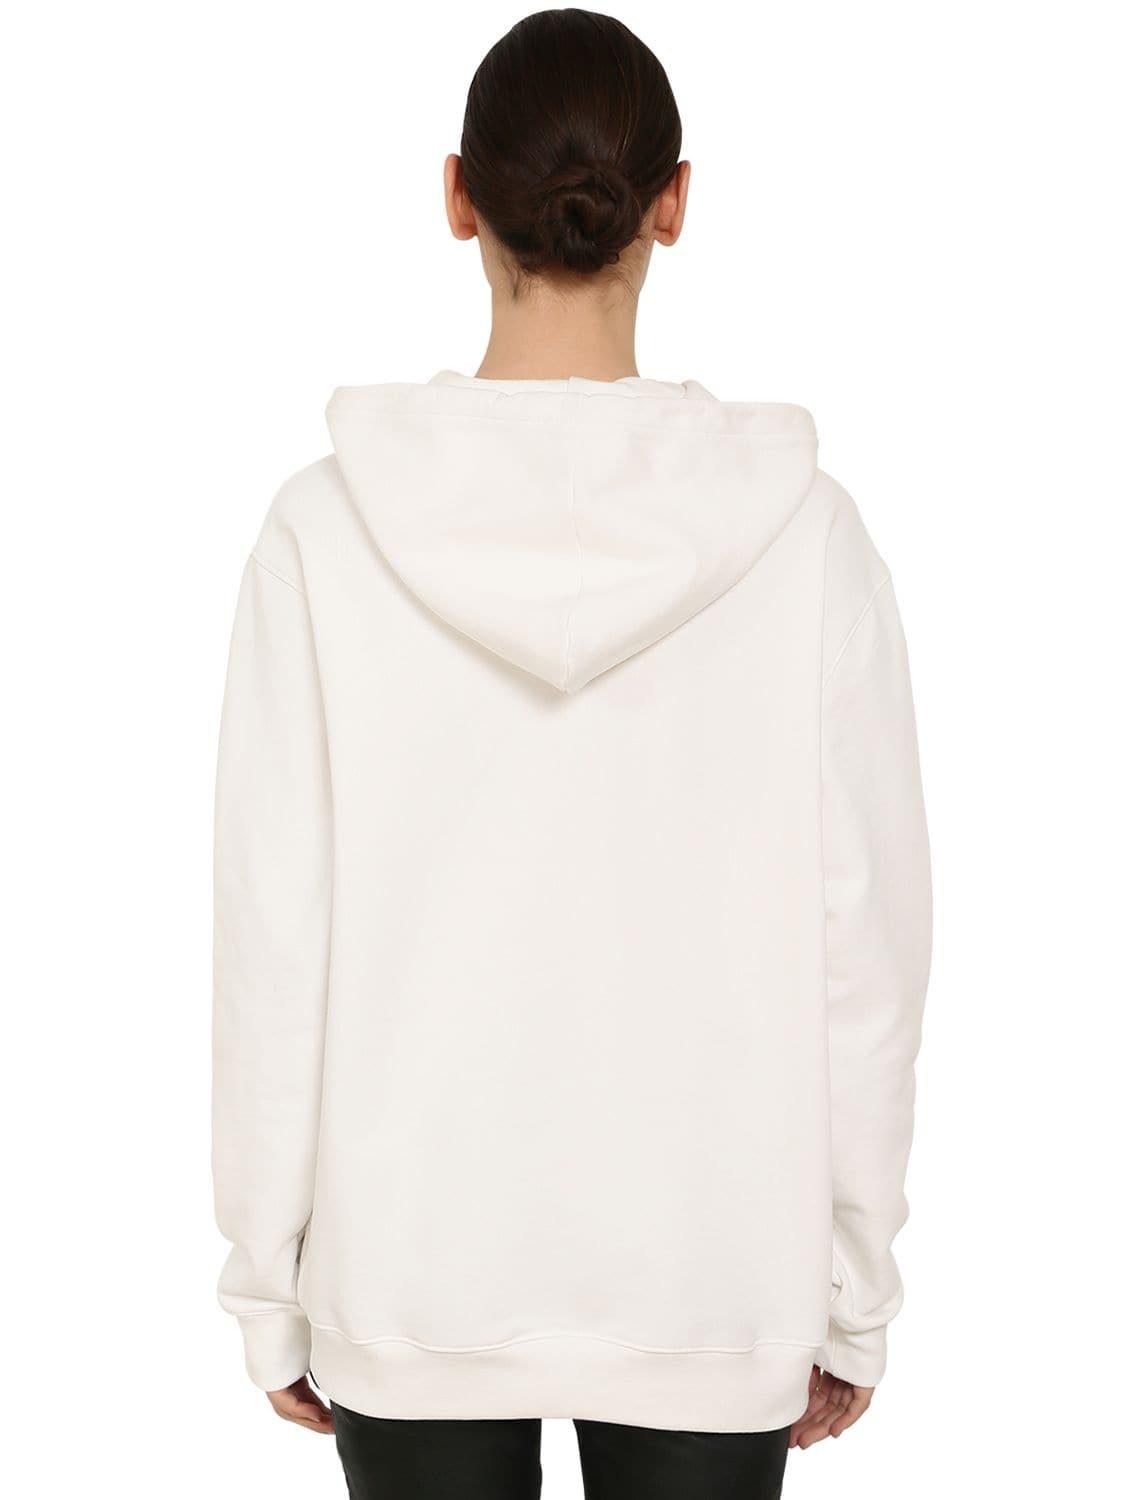 Moschino Teddy Printed Jersey Sweatshirt Hoodie in White - Save 45% - Lyst